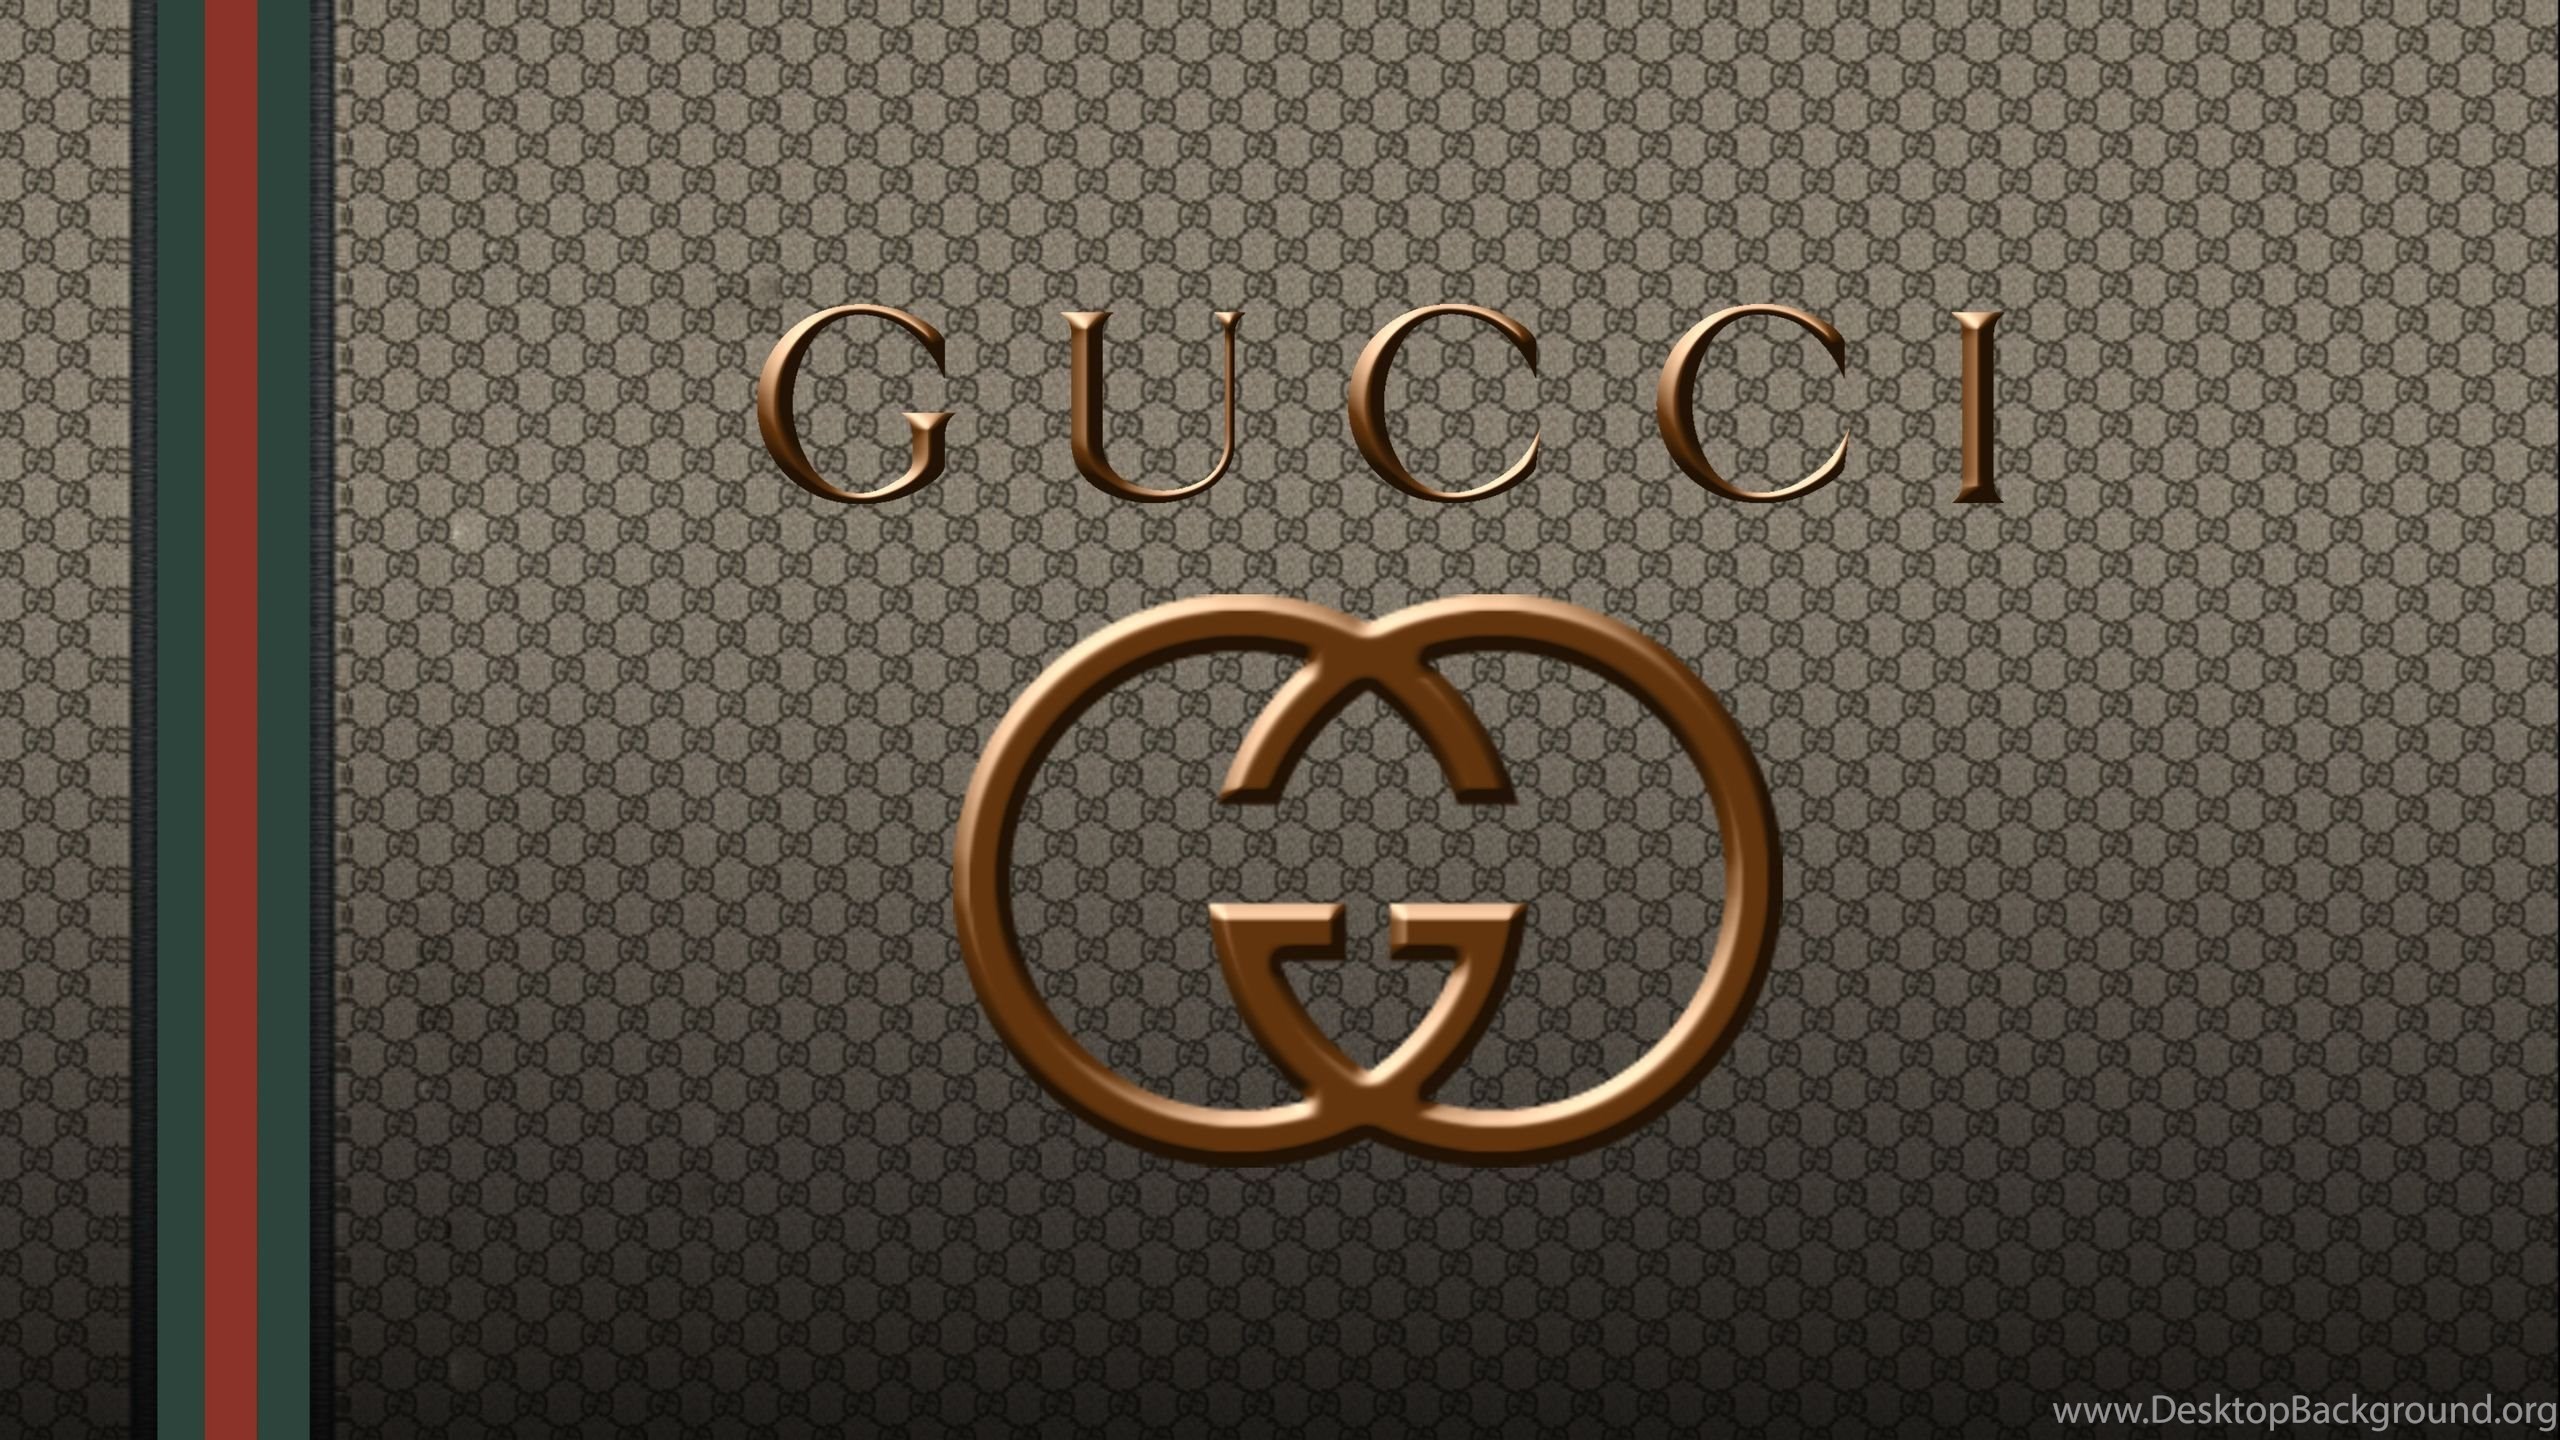 Gucci Wallpaper 4K - Supreme And Gucci Wallpapers ...